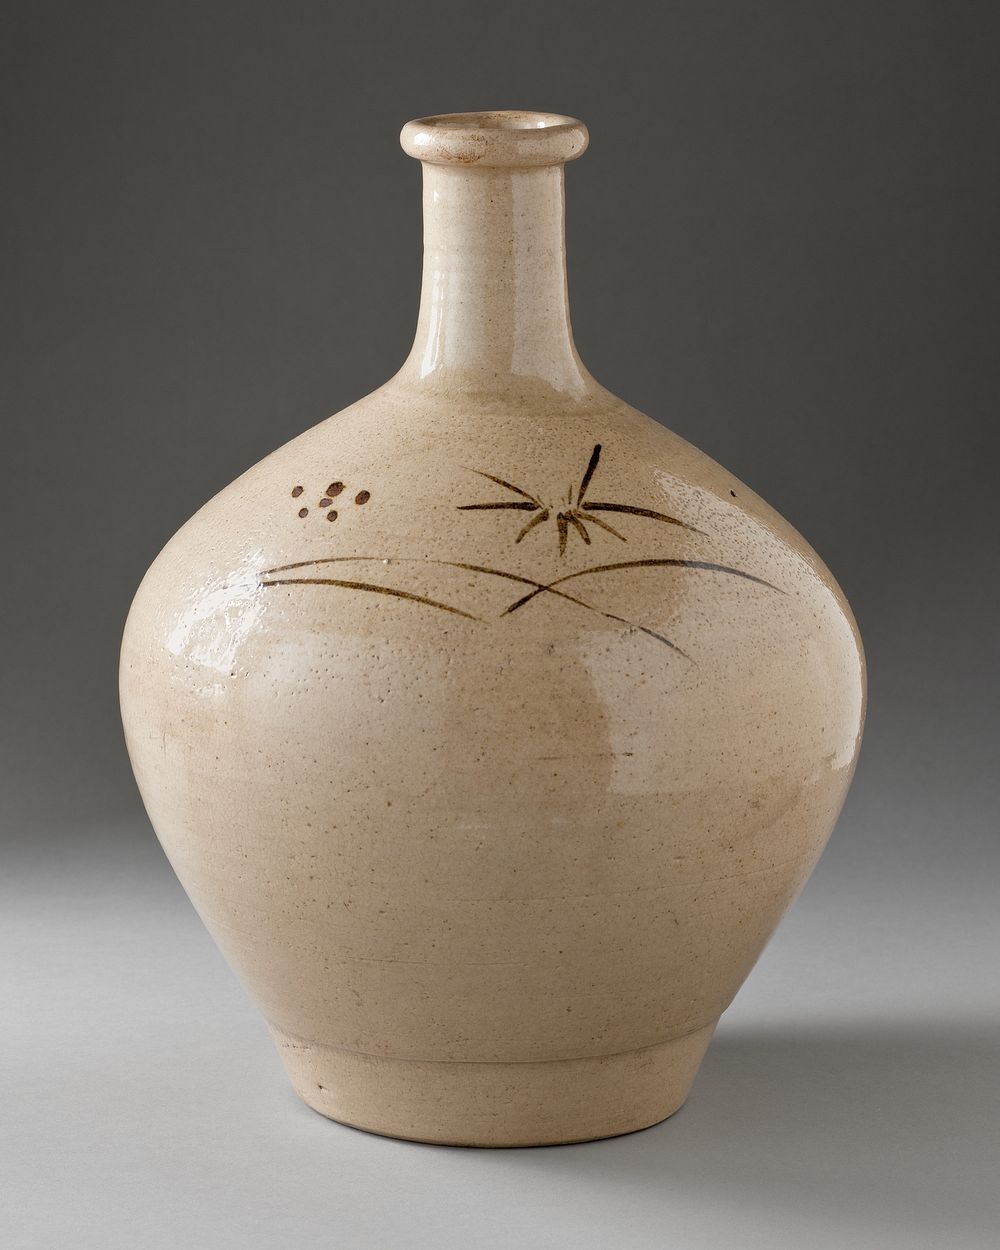 Sake Bottle with Plum, Bamboo, and Pine Motifs